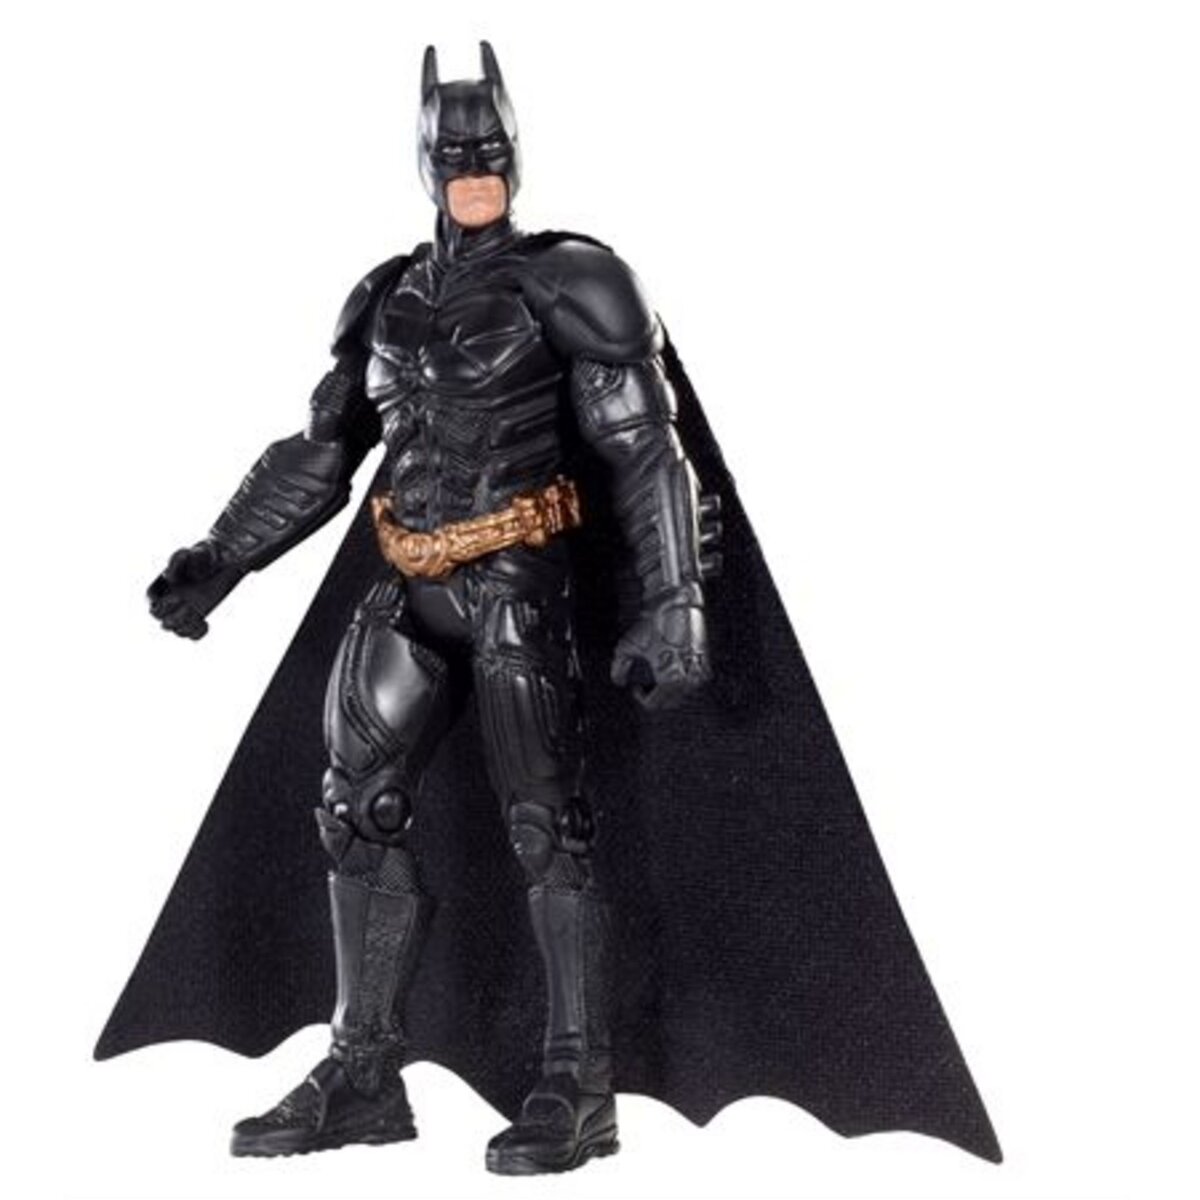 Batman цена. Игровой набор Mattel the Dark Knight Trilogy Бэтмен y9097. Пластиковая игрушка Бэтмен. Бэтмен тёмный рыцарь игрушка. Mattel Batman the Dark Knight.